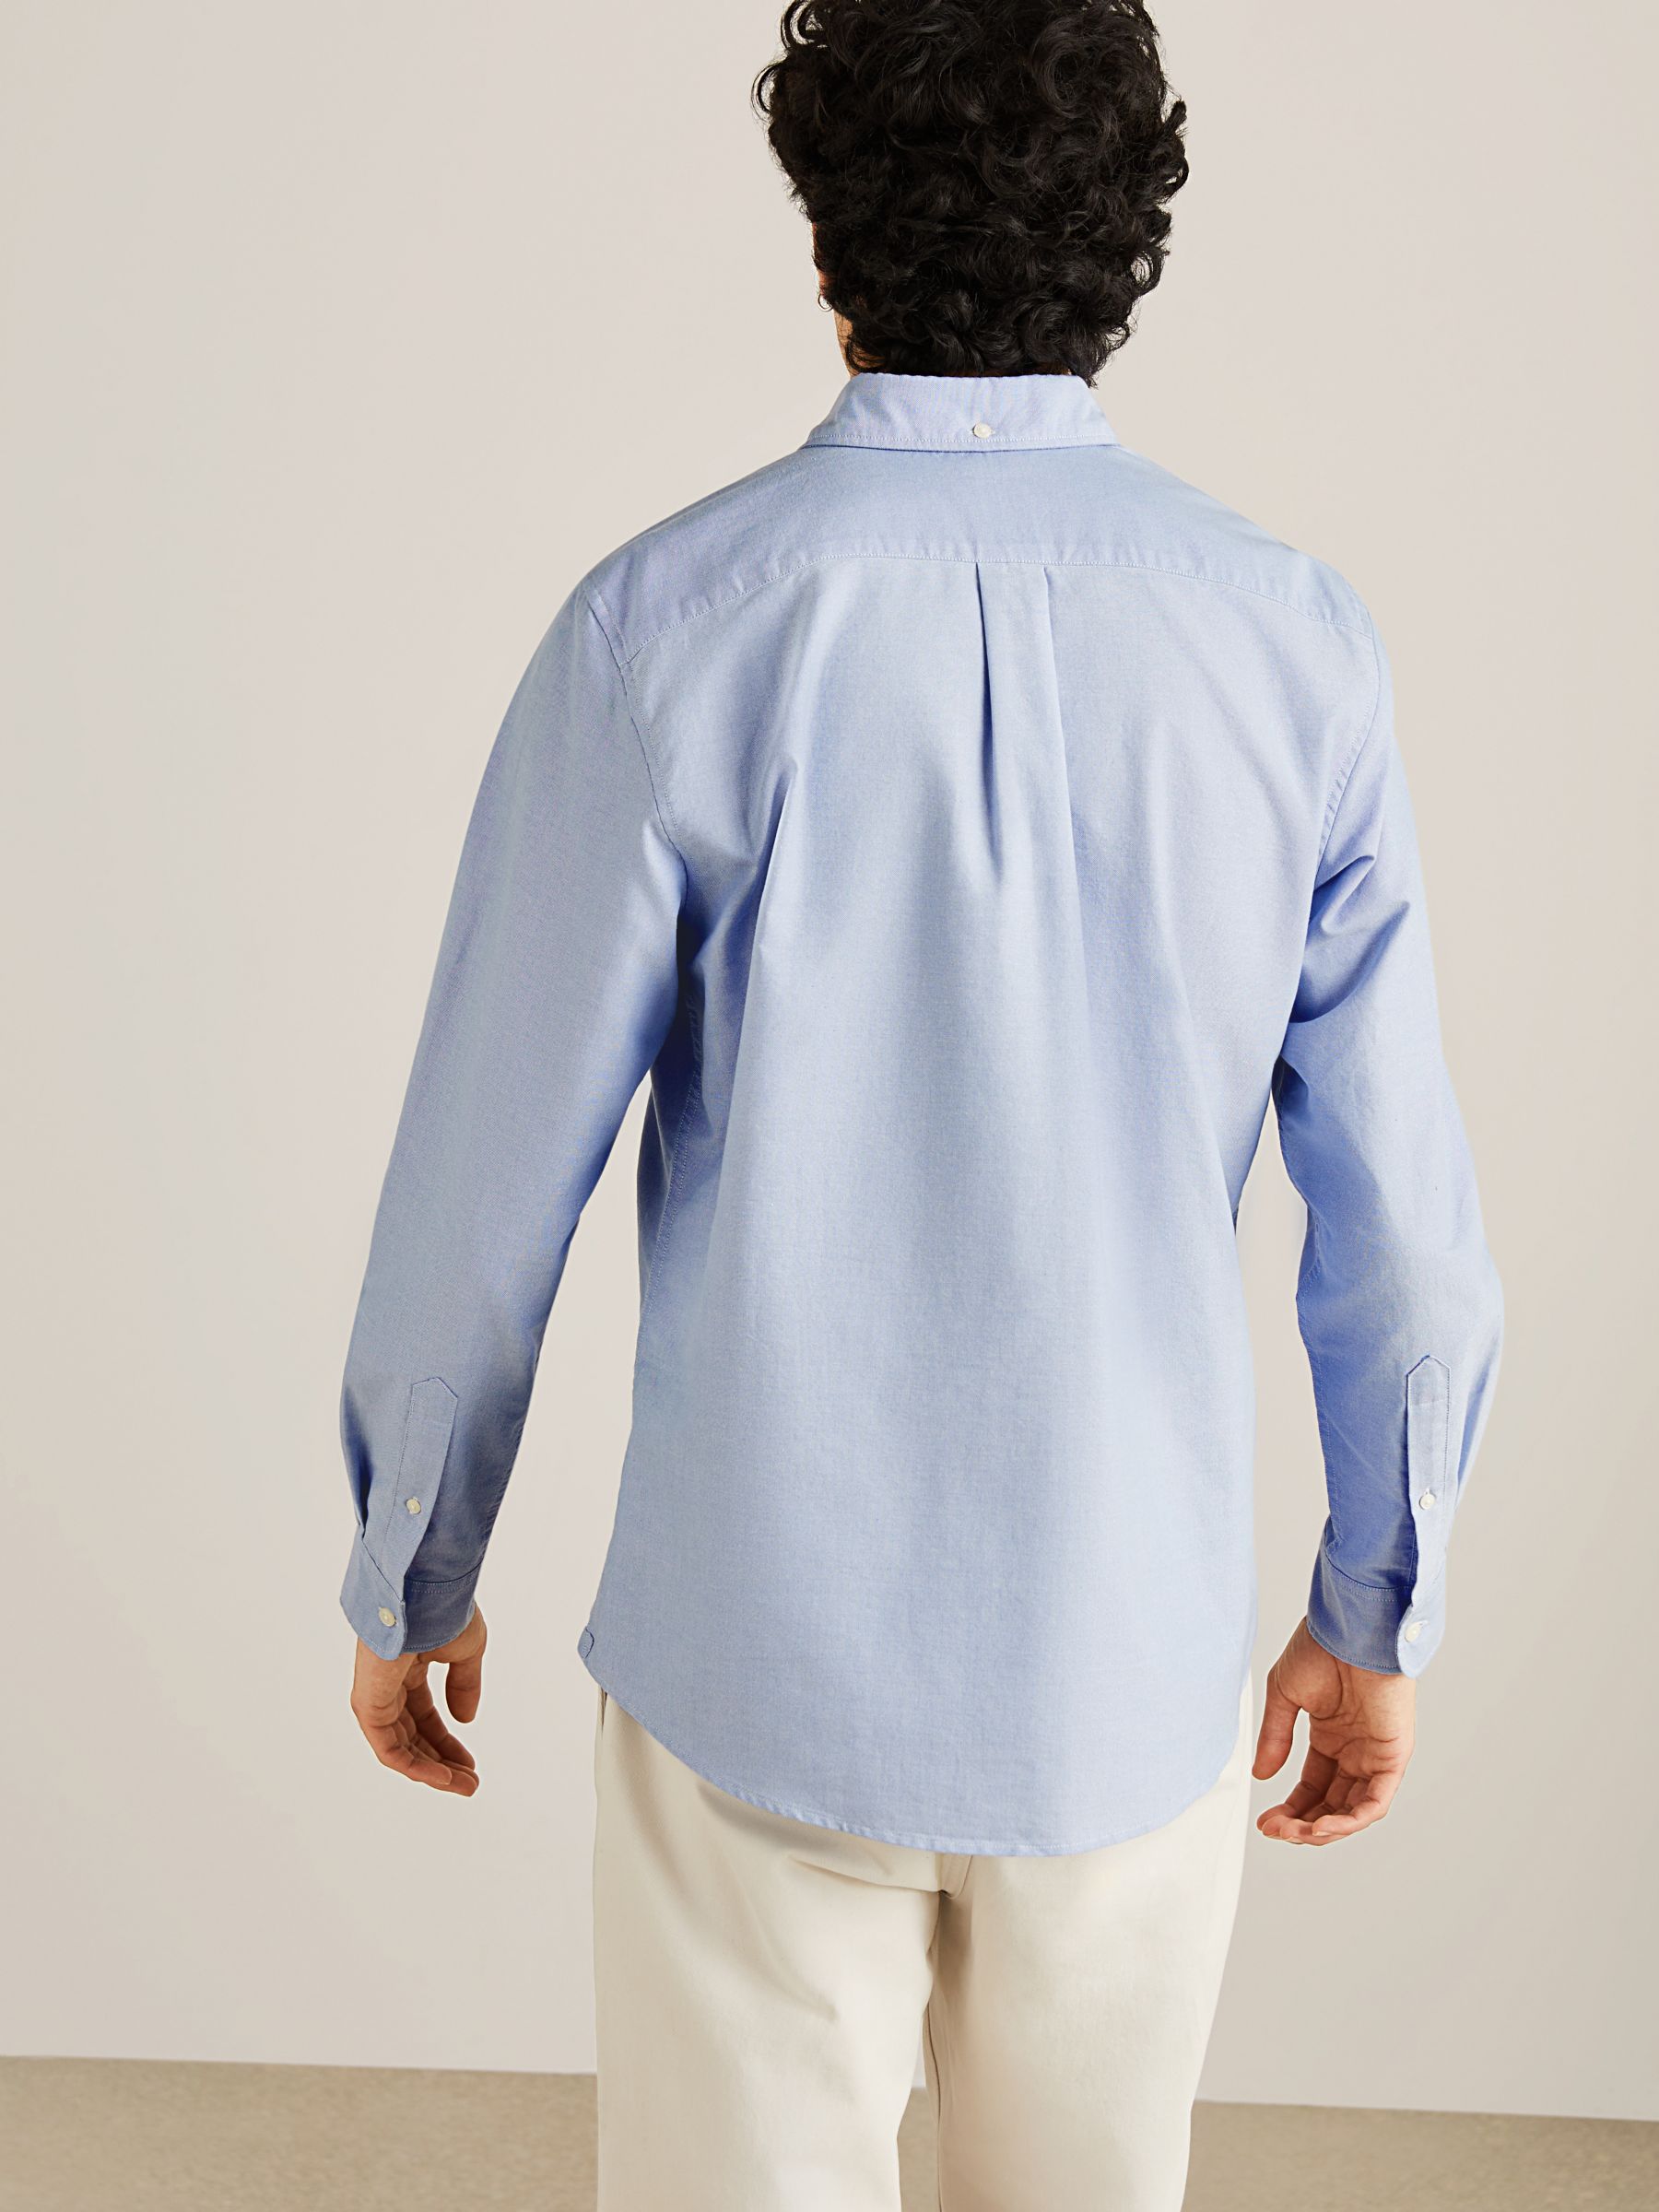 Uty Apparel long sleeve denim shirt, 100% cotton, unisex, Brighton Gardens  logo